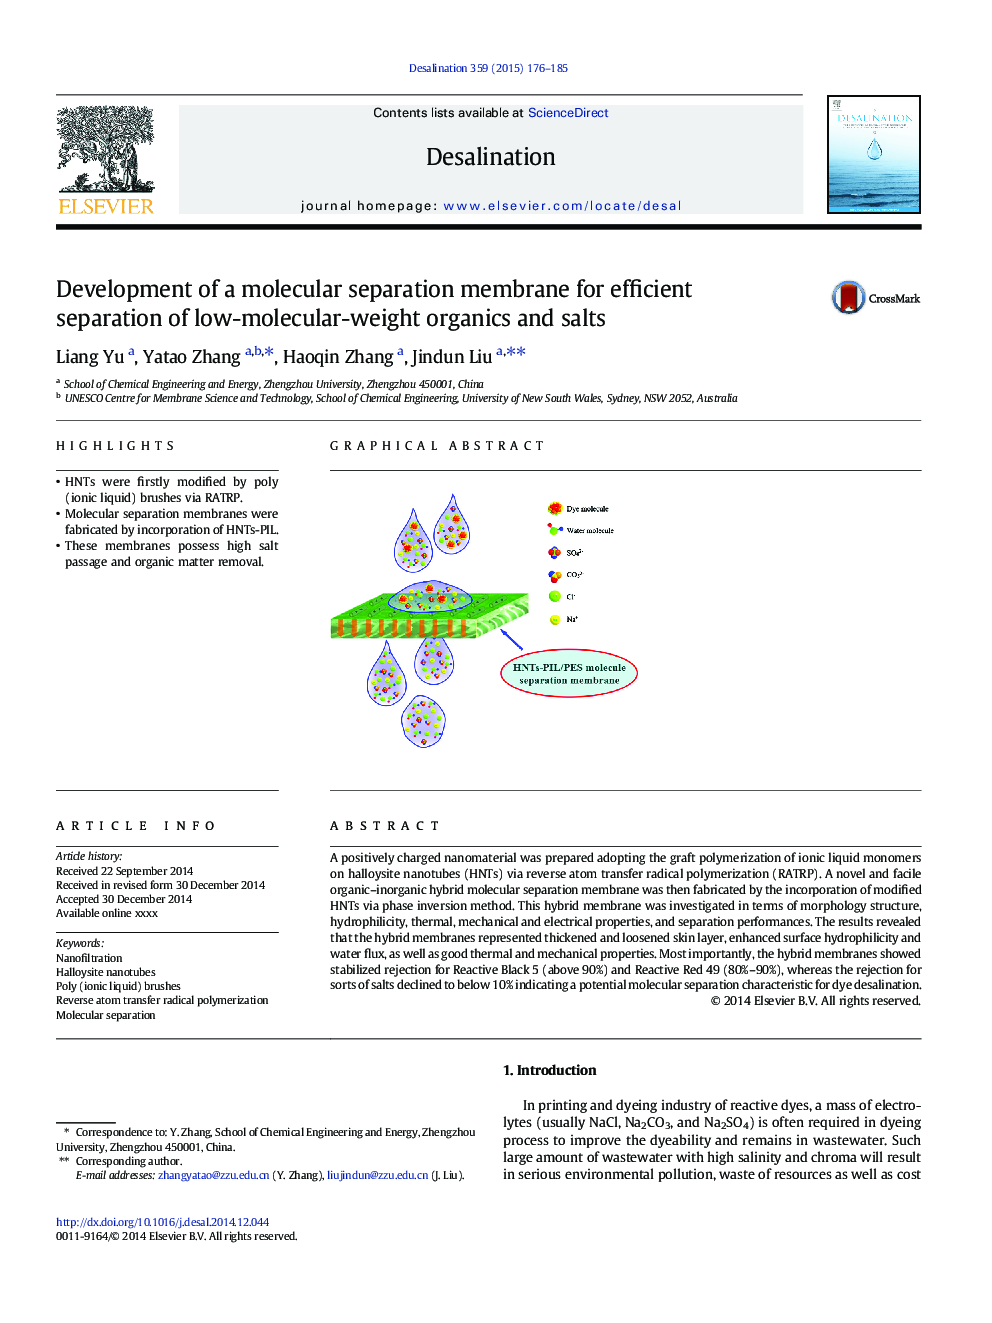 Development of a molecular separation membrane for efficient separation of low-molecular-weight organics and salts